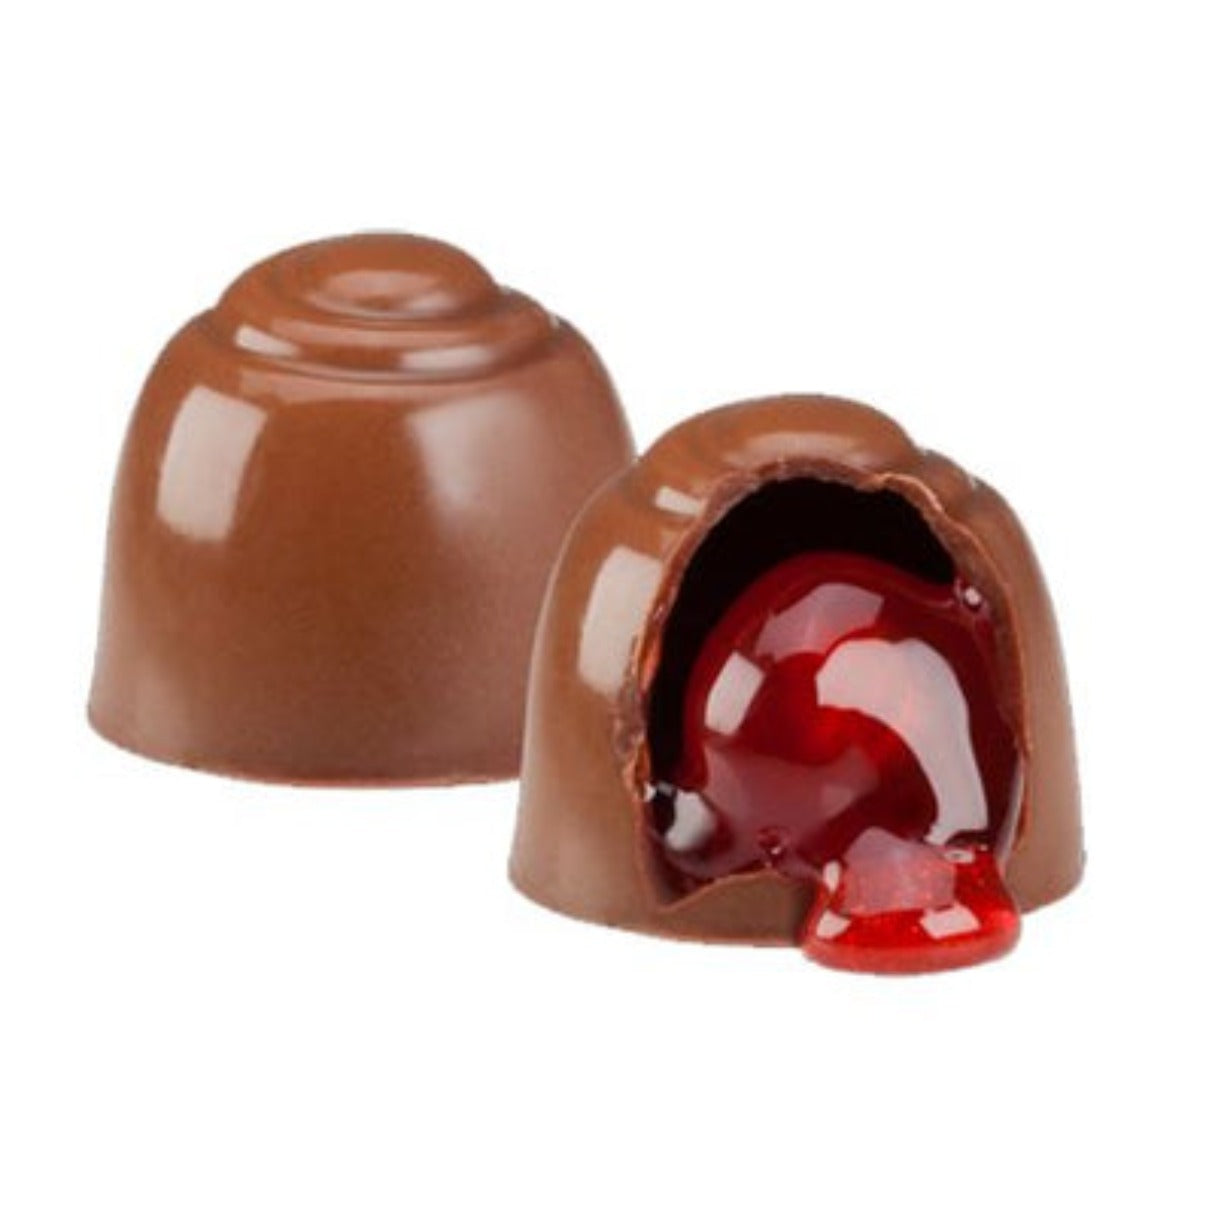 Cella's Milk Chocolate Covered Cherries Box 8oz - 12ct